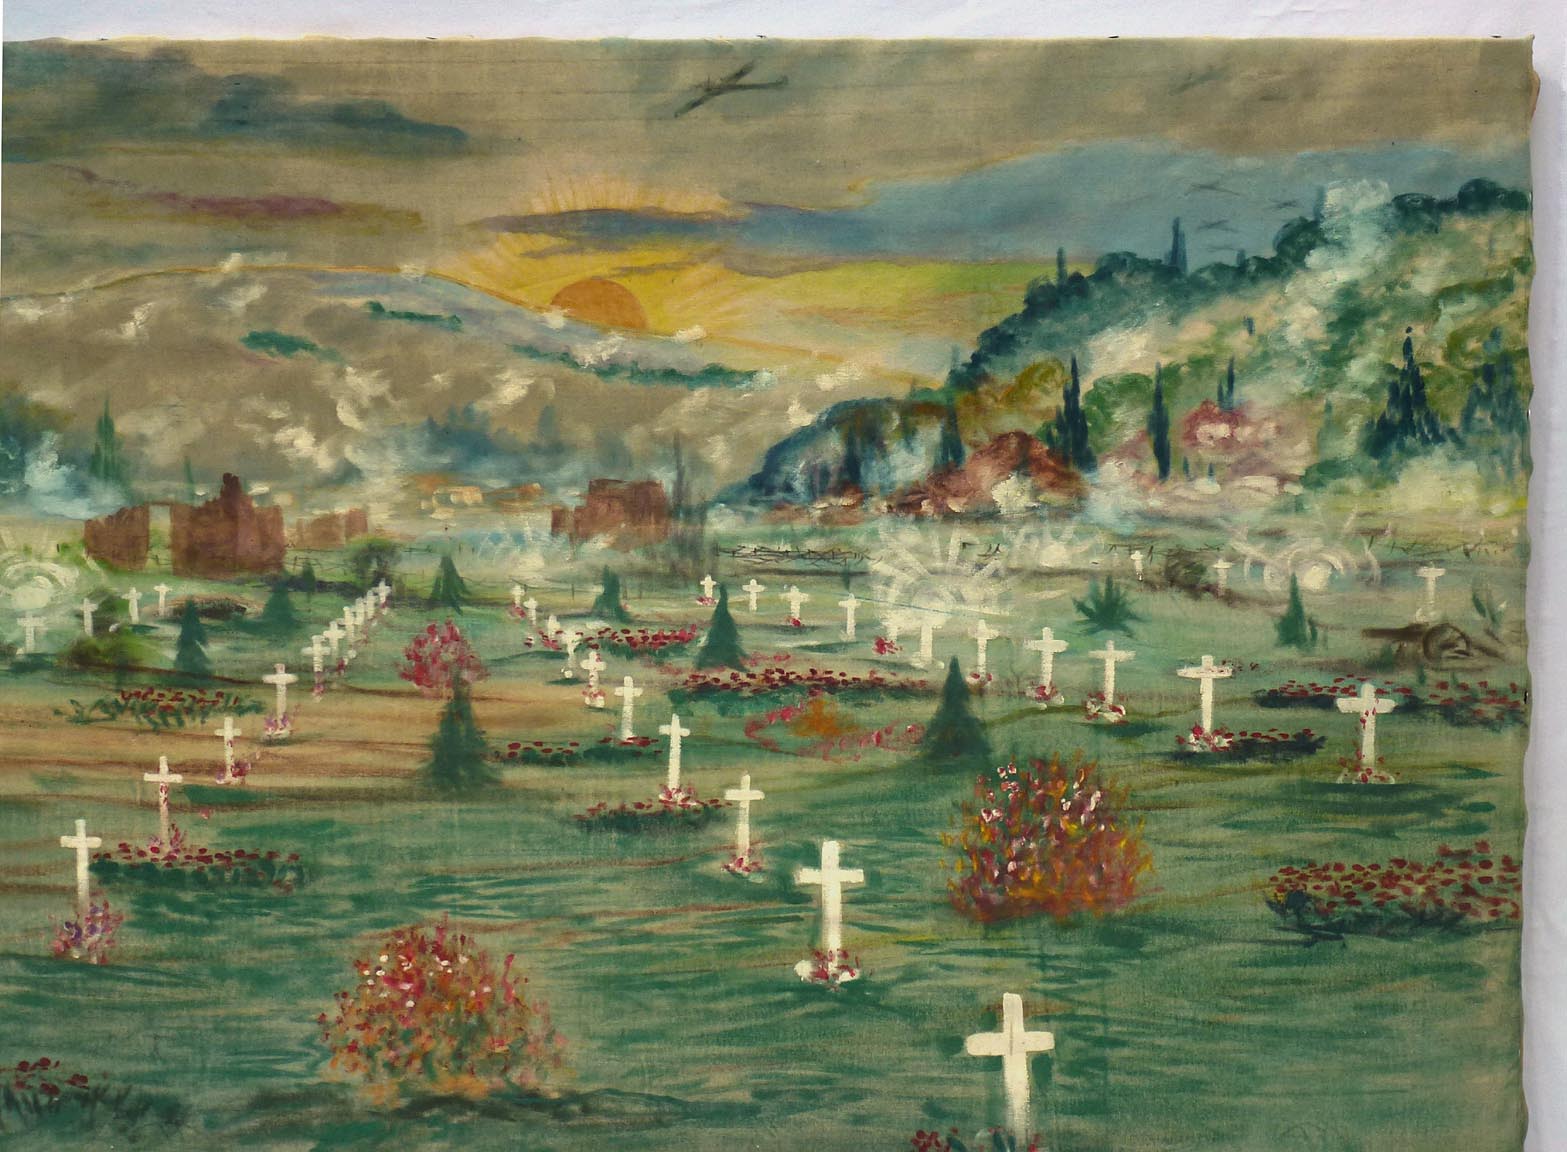 War graveyard painting